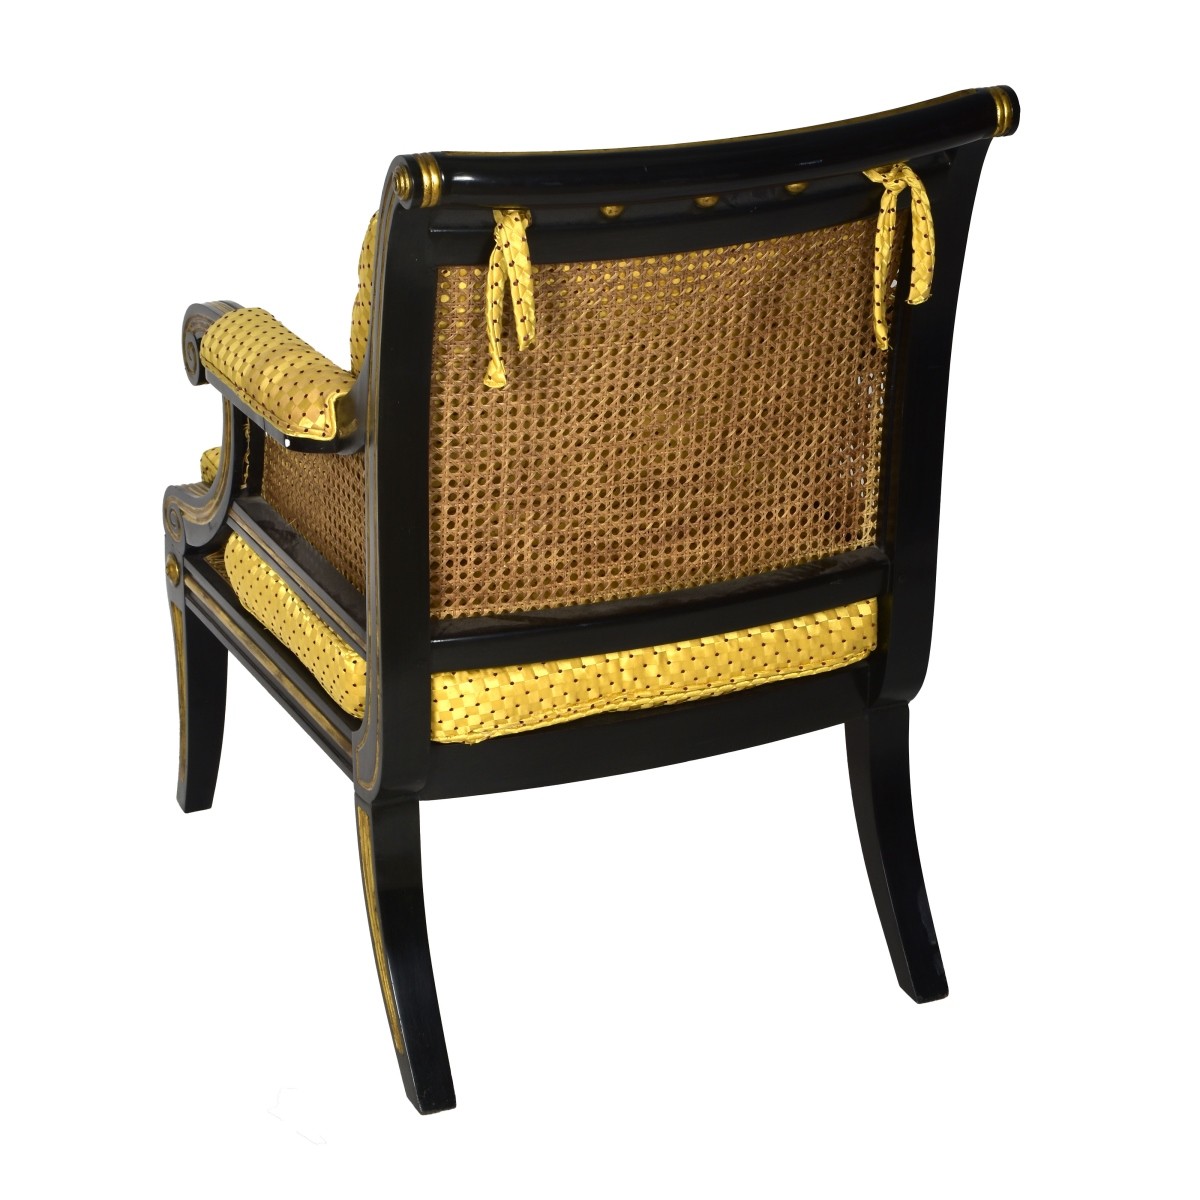 Regency style Arm Chair